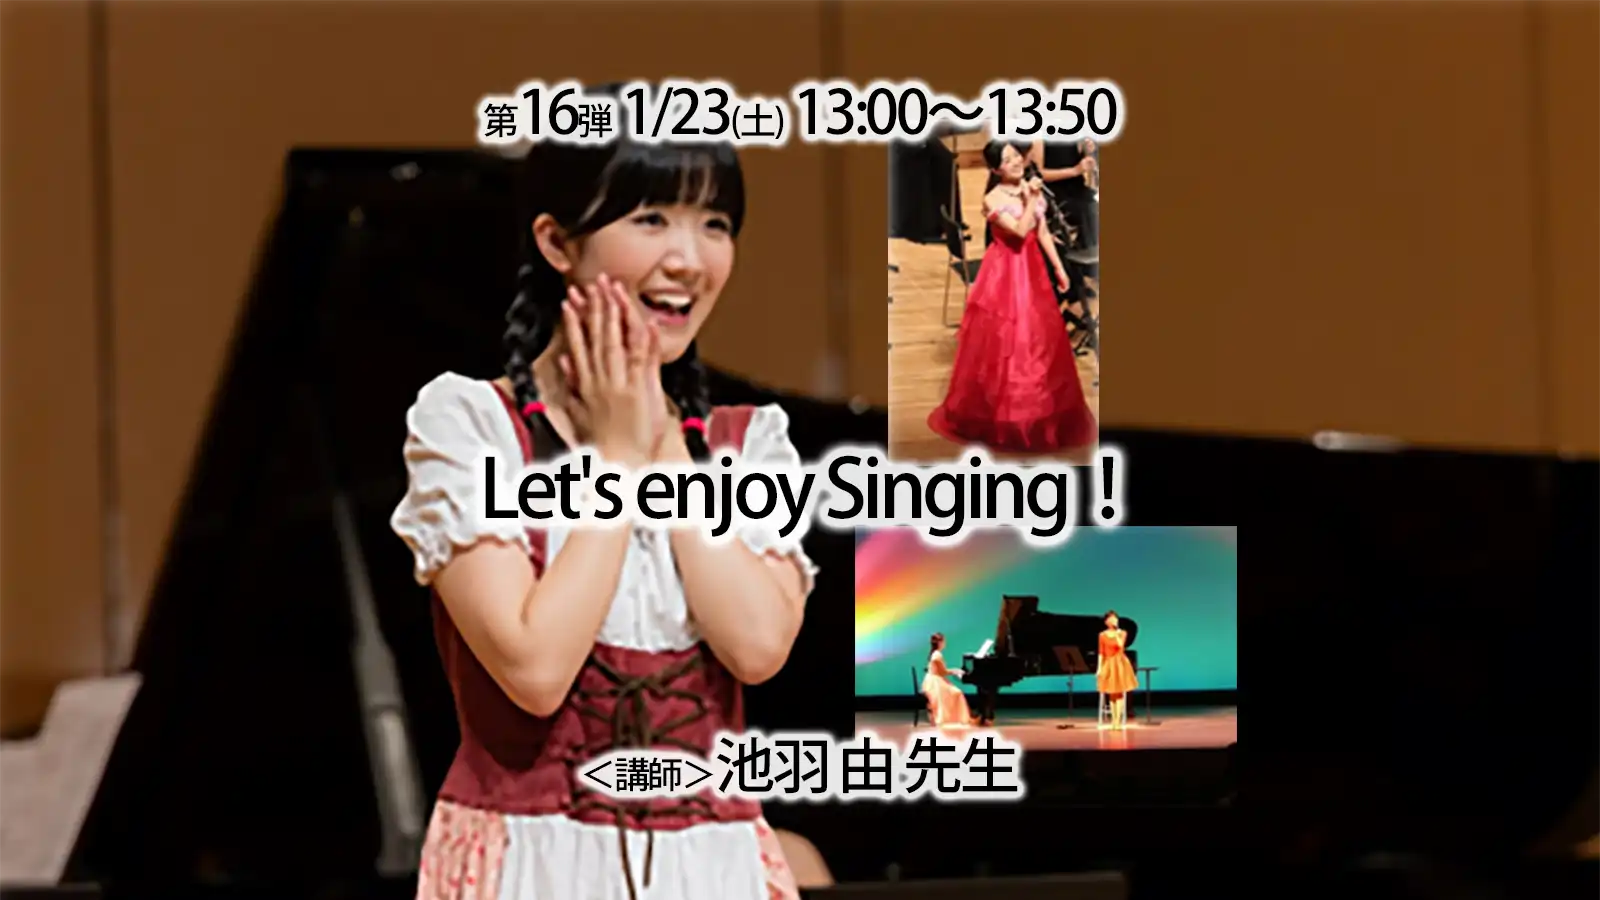 Let's enjoy Singingキャッチコピー画像